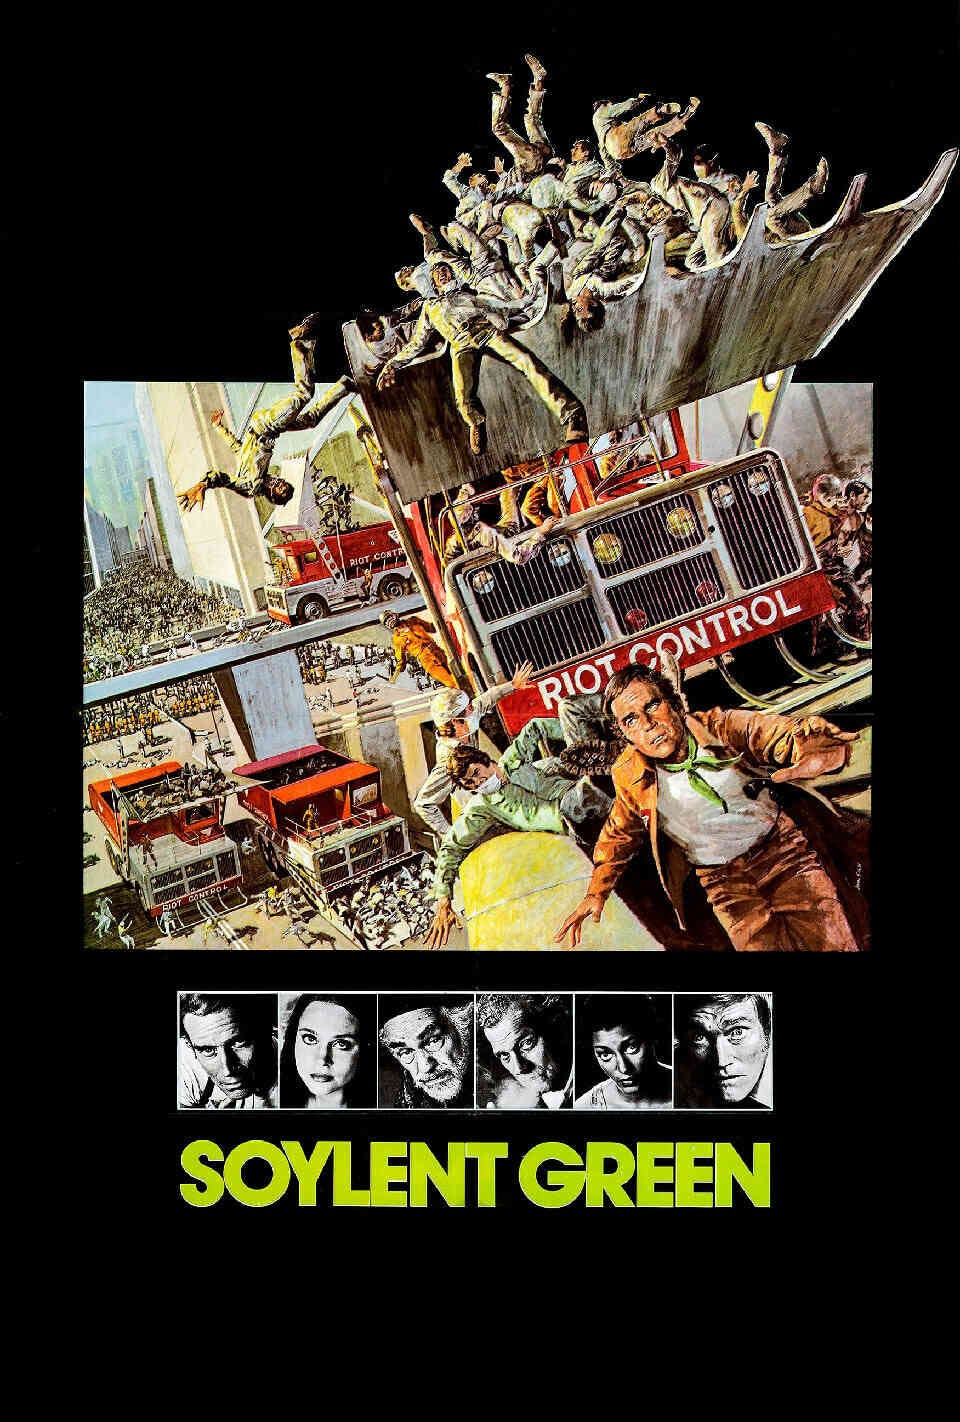 Read Soylent Green screenplay (poster)